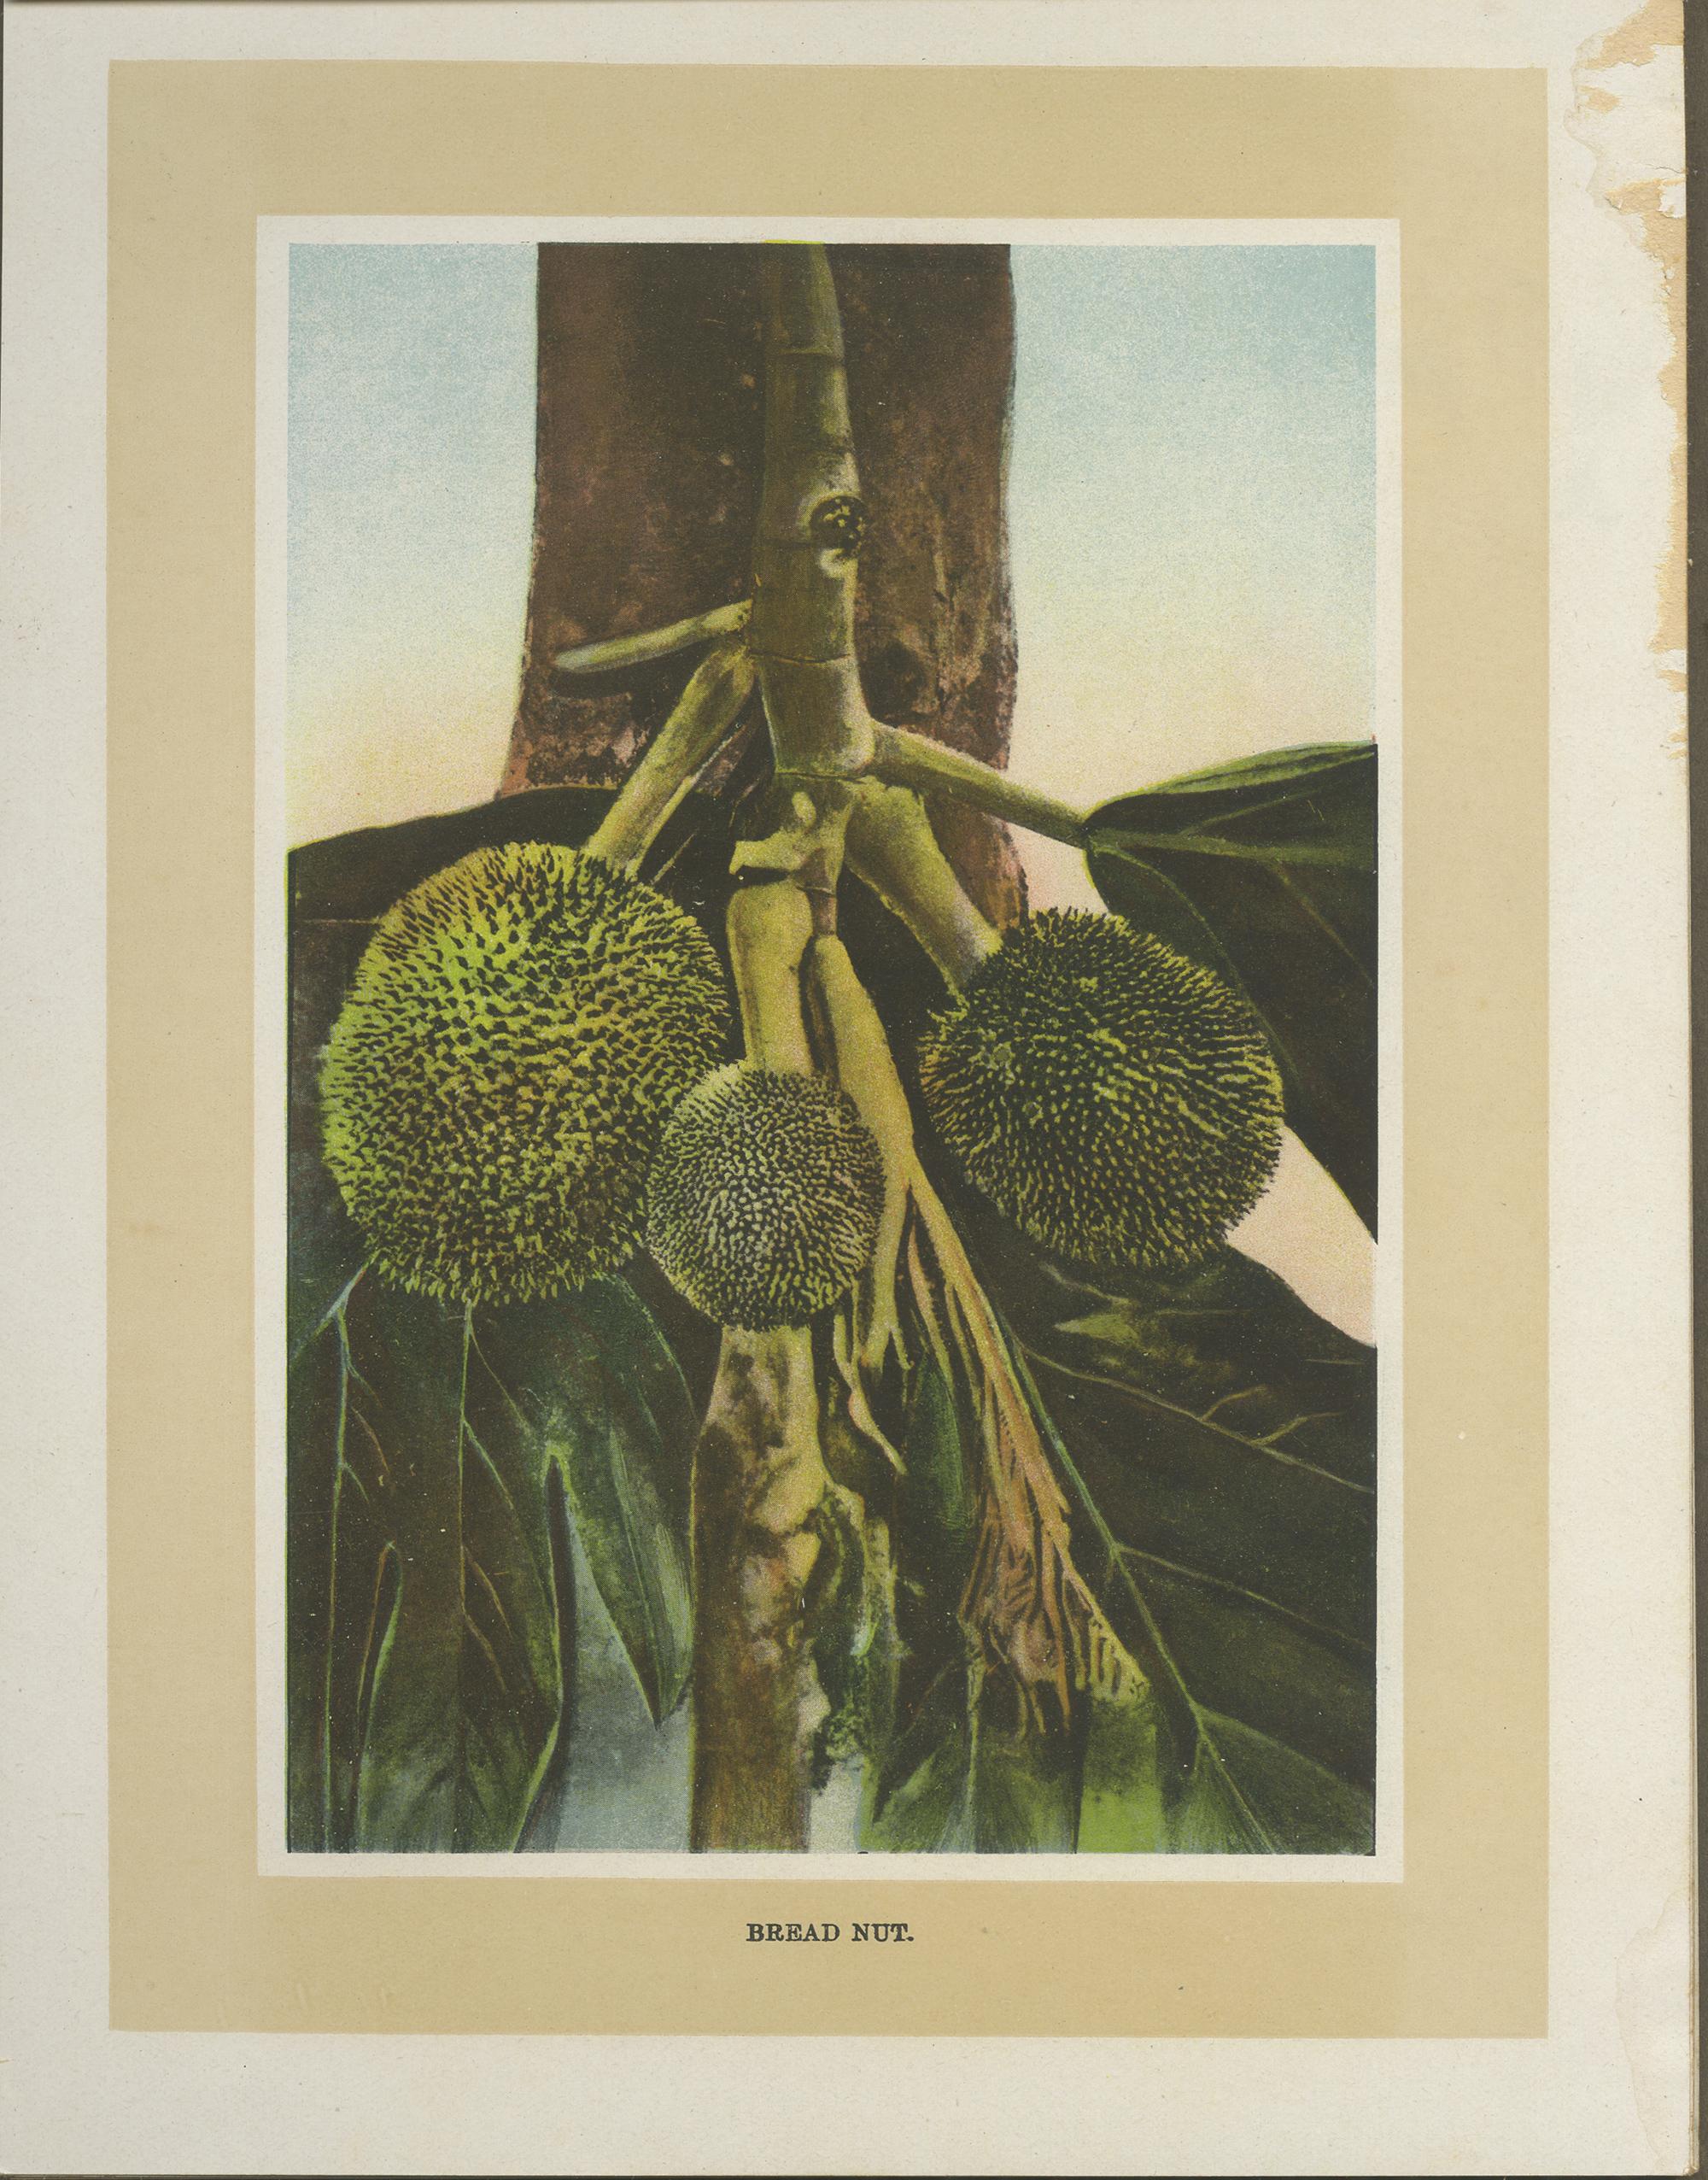 Paper Trinidad, 24 Color Photographs of Port of Spain-Tobago & Island Scenery, c 1930